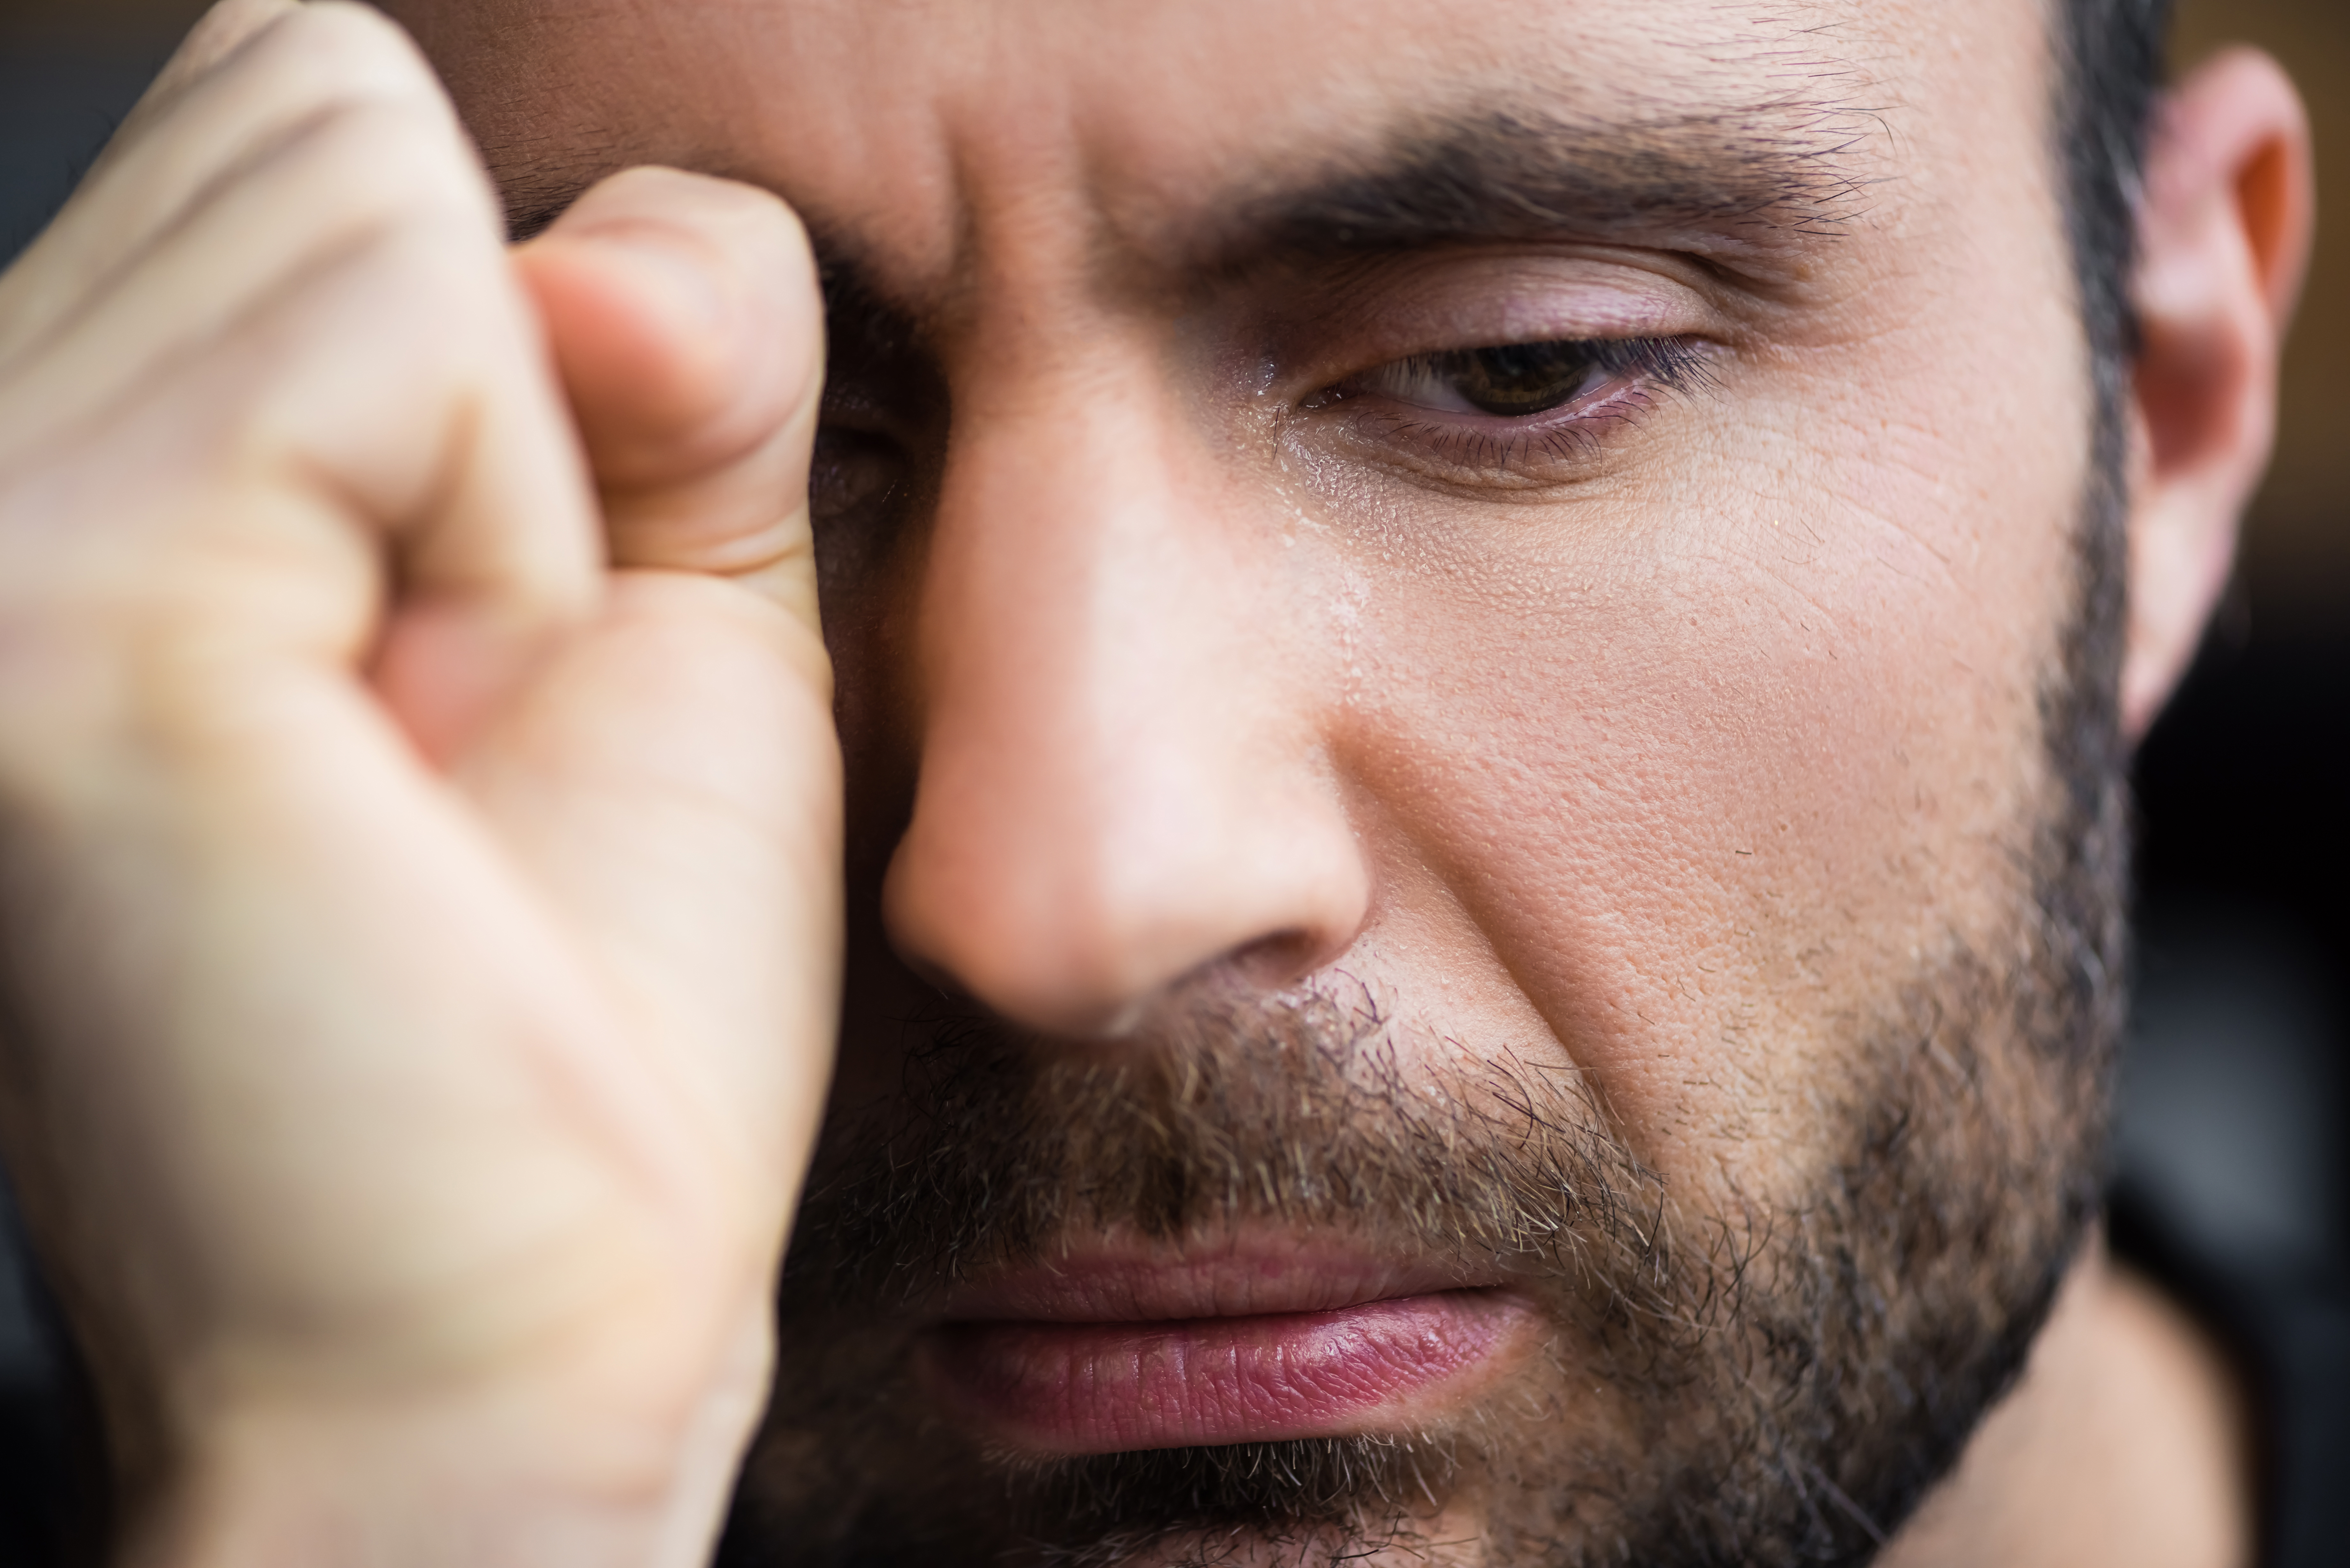 A sad man wiping a tear | Source: Shutterstock